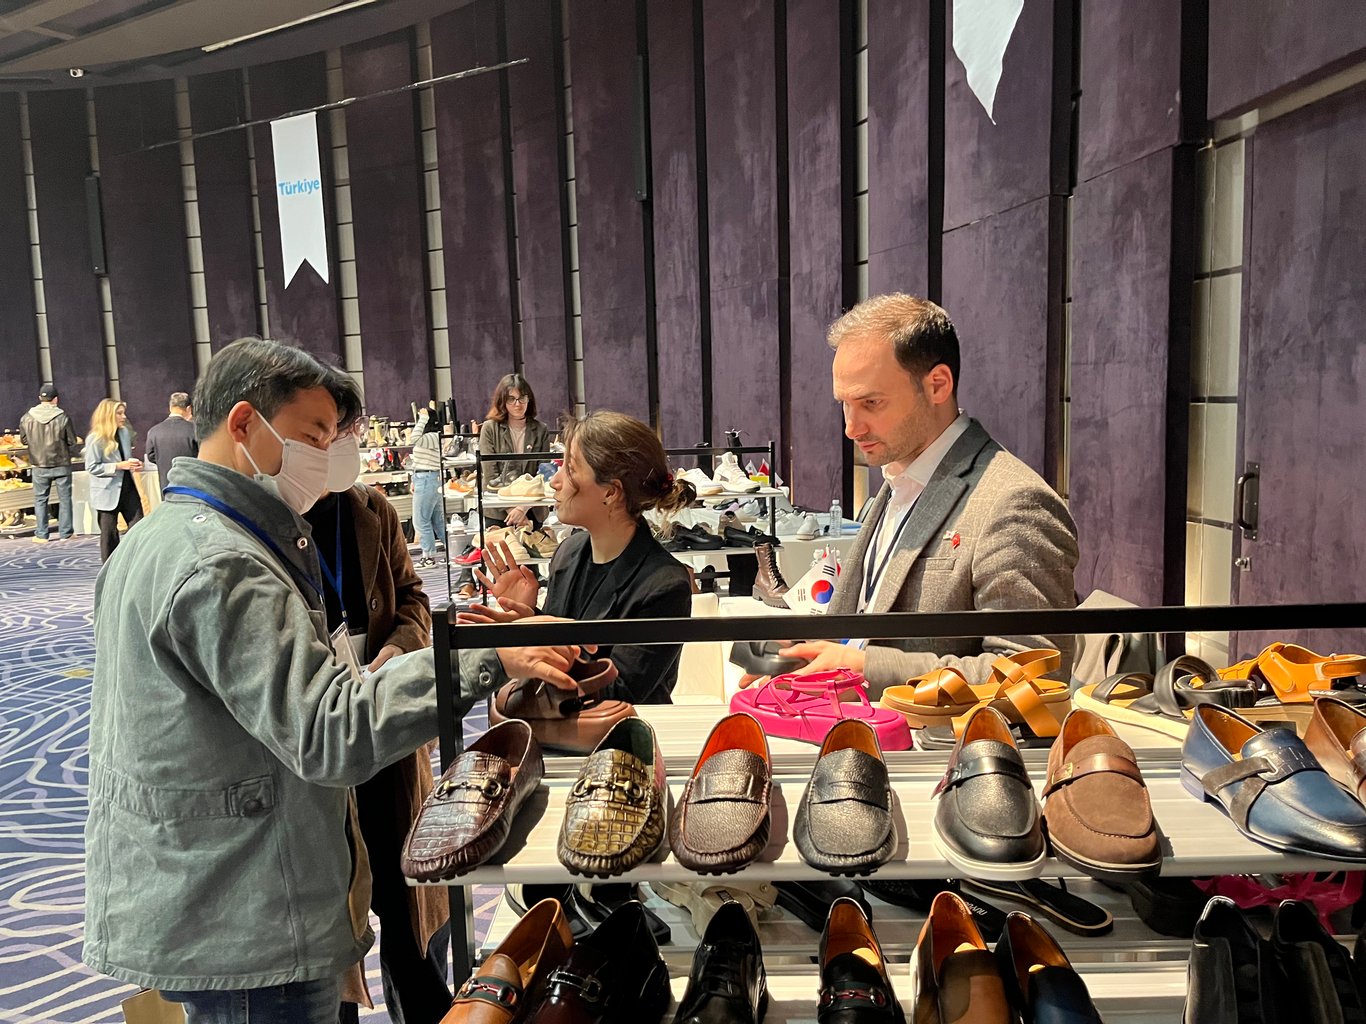 Turkish Shoes @ South Korea Trade Delegation 2023-1